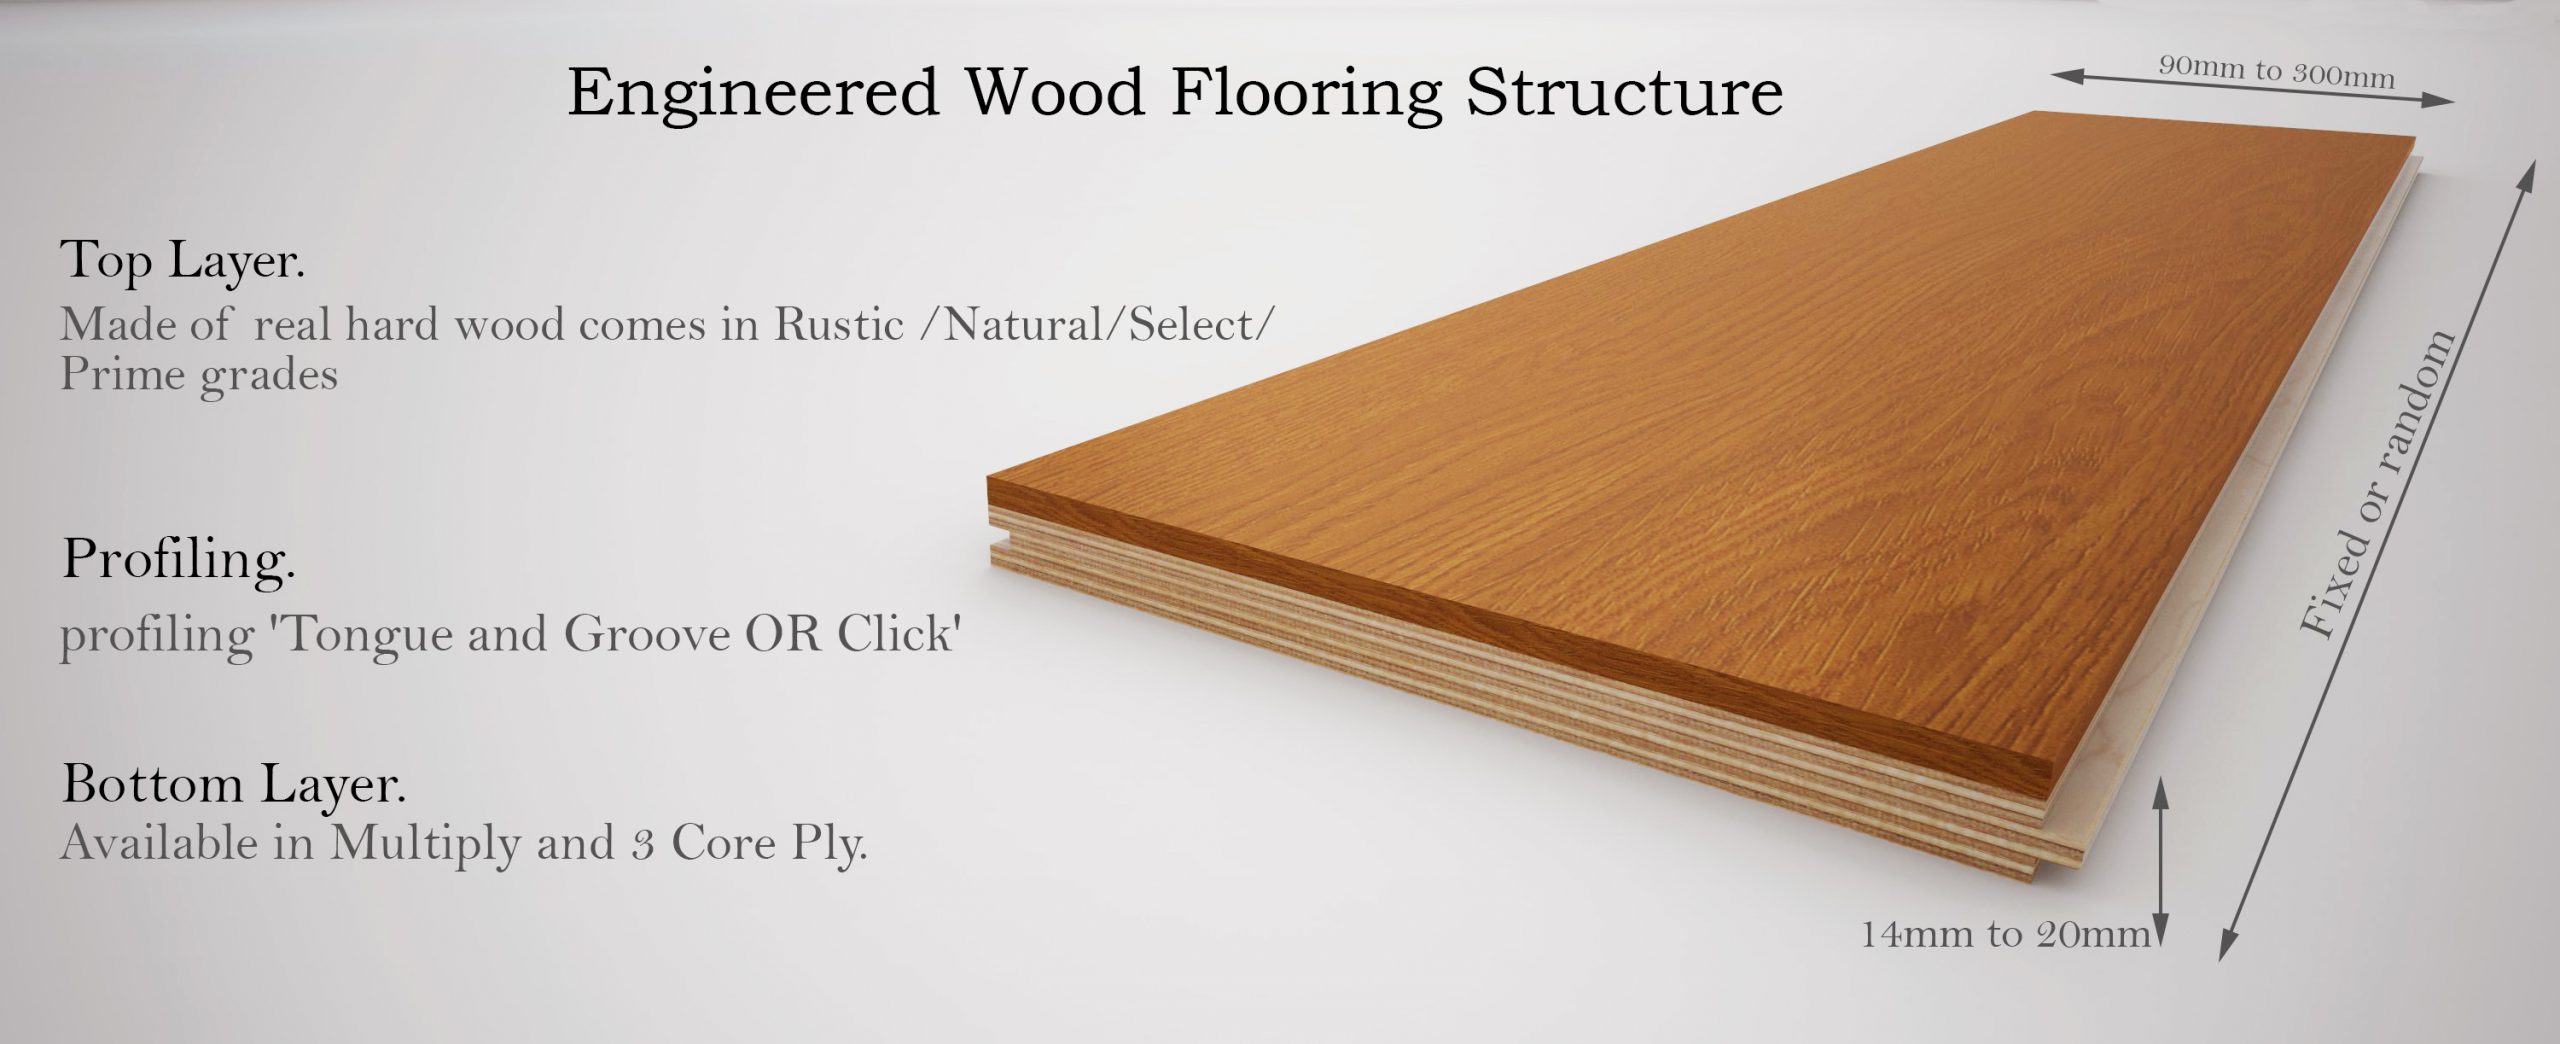 https://www.woodandbeyond.com/blog/wp-content/uploads/sites/2/2016/09/engineered-wood-flooring-thickness-width_ensnnn-scaled.jpg?x59443